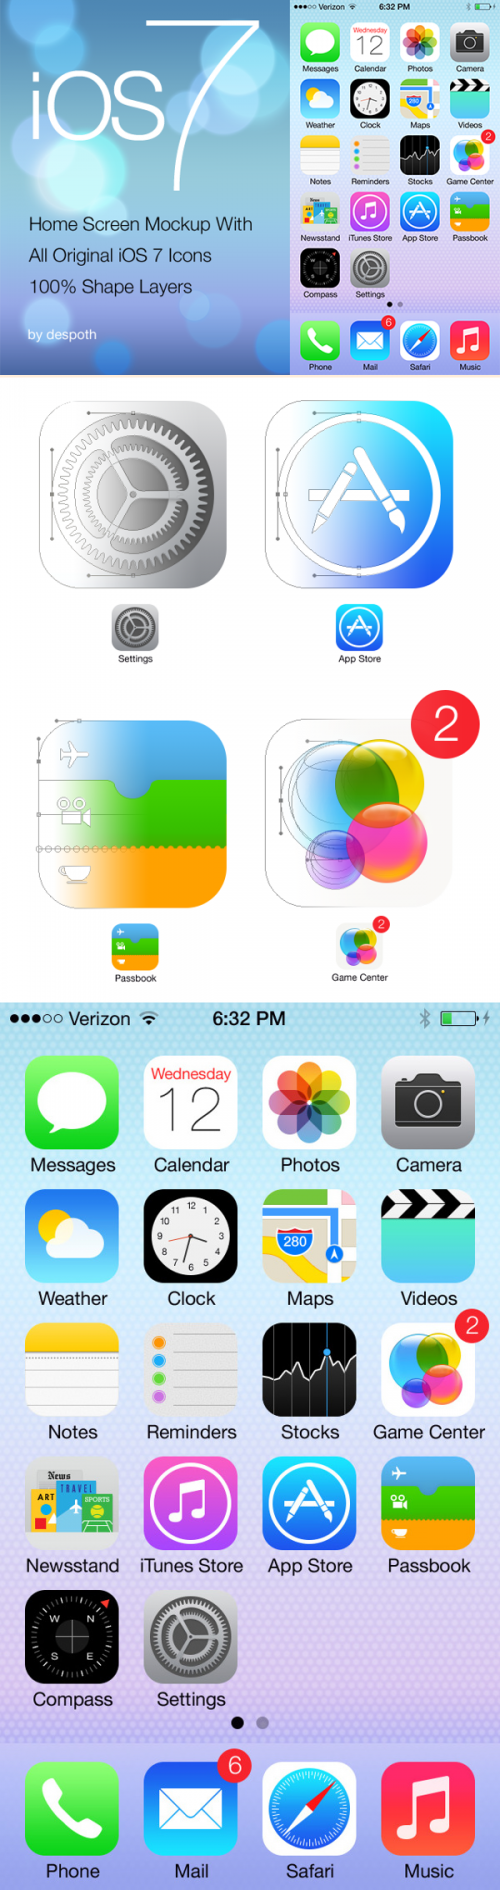 iOS 7 ホーム画面のアイコン PSD